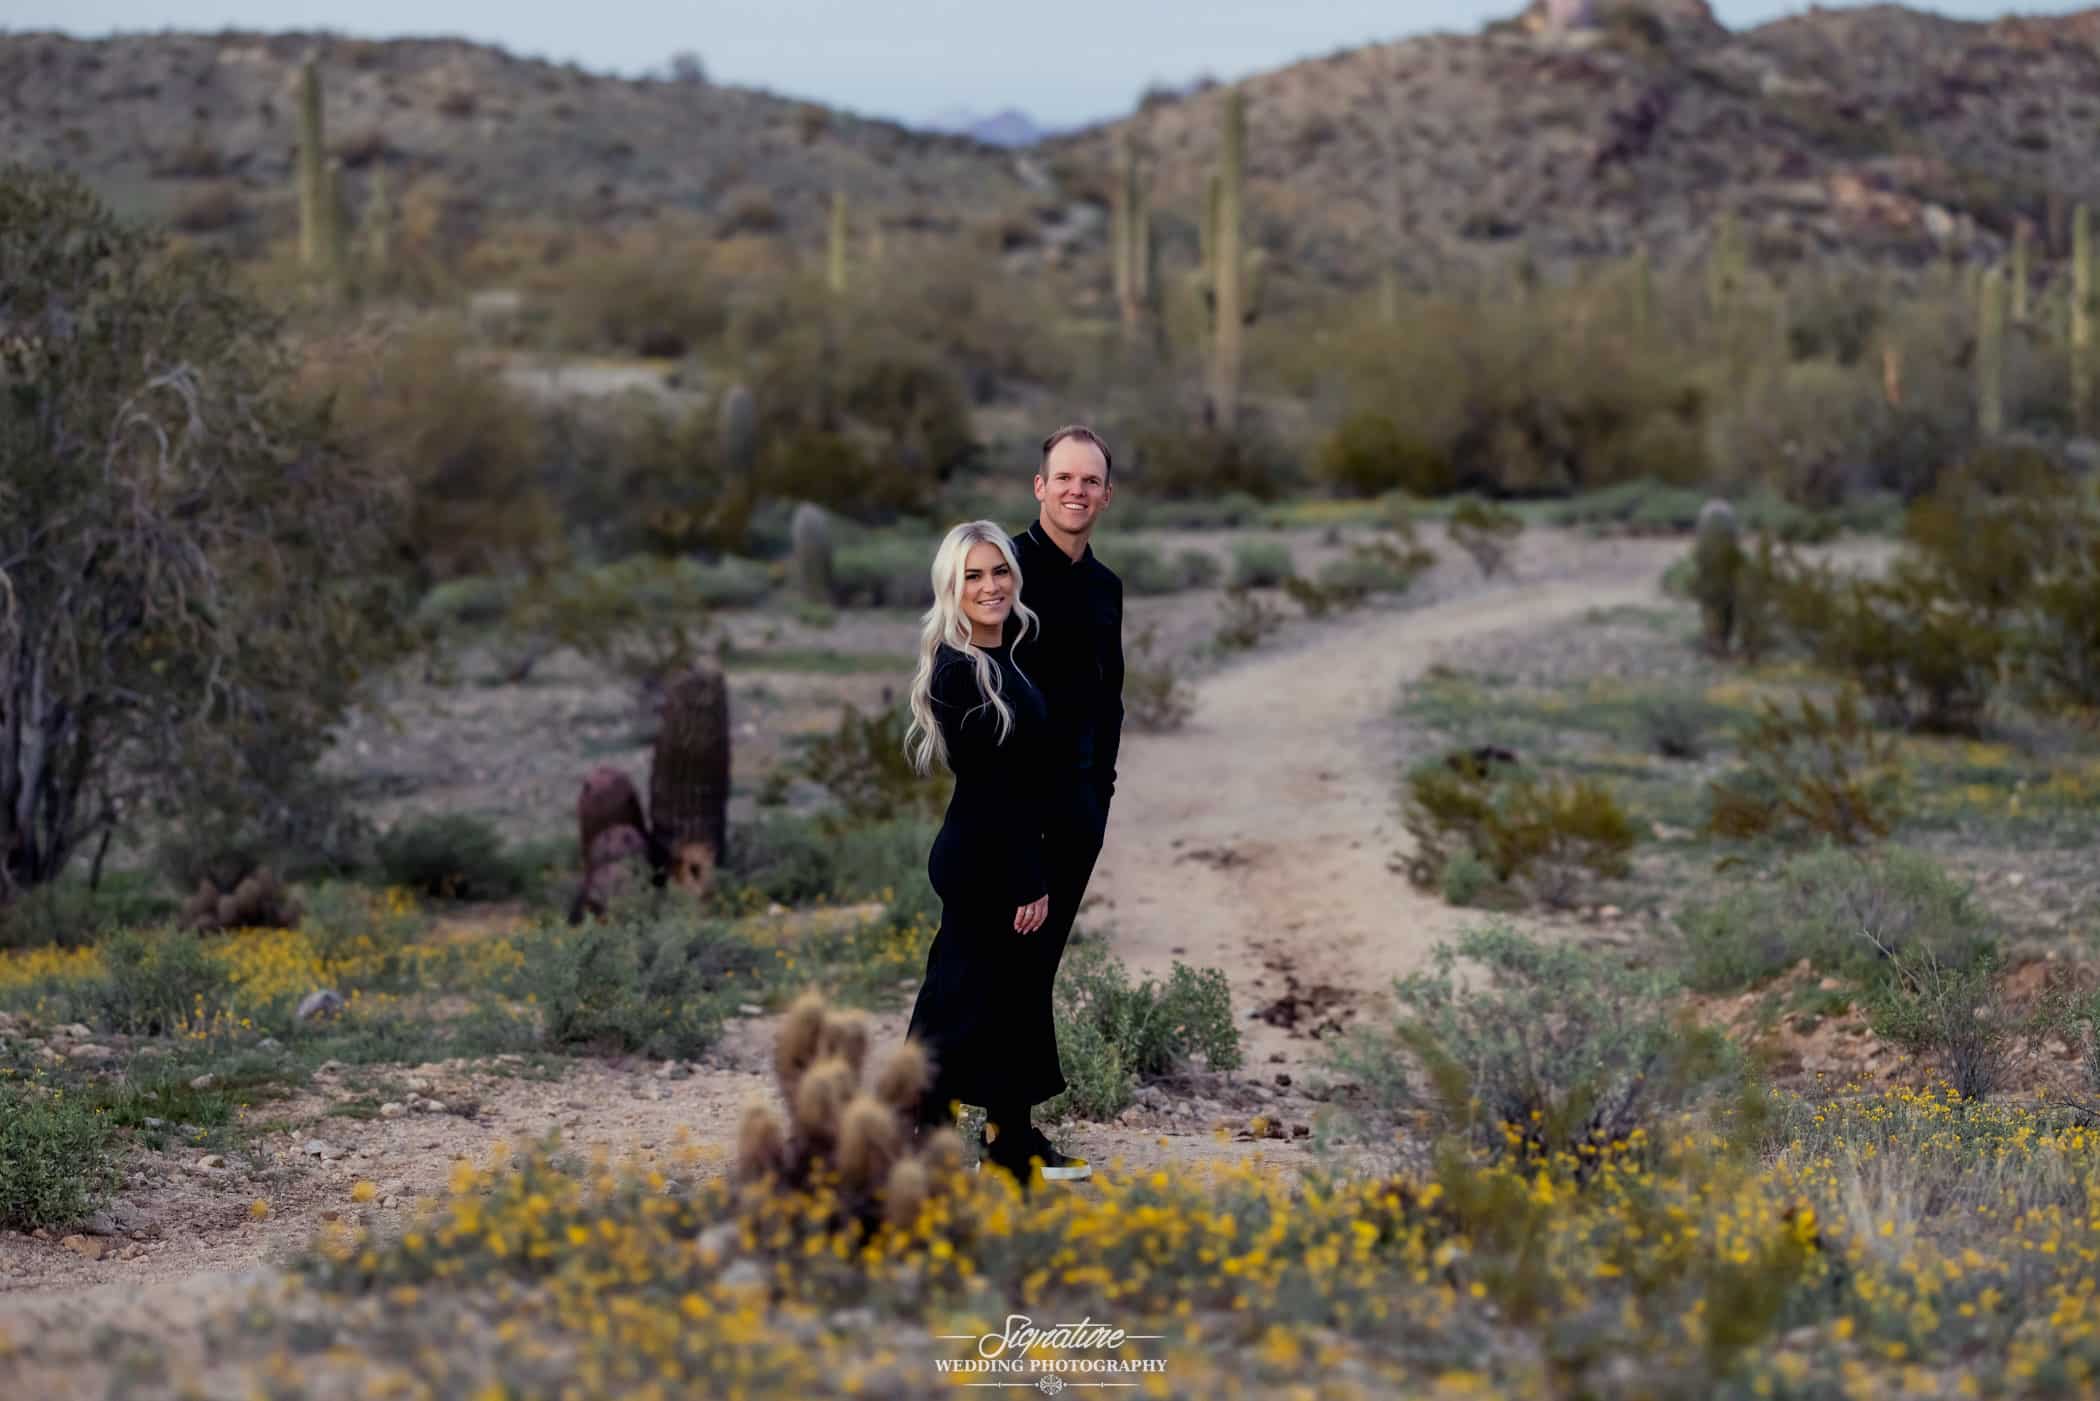 Couple holding hand standing on desert path